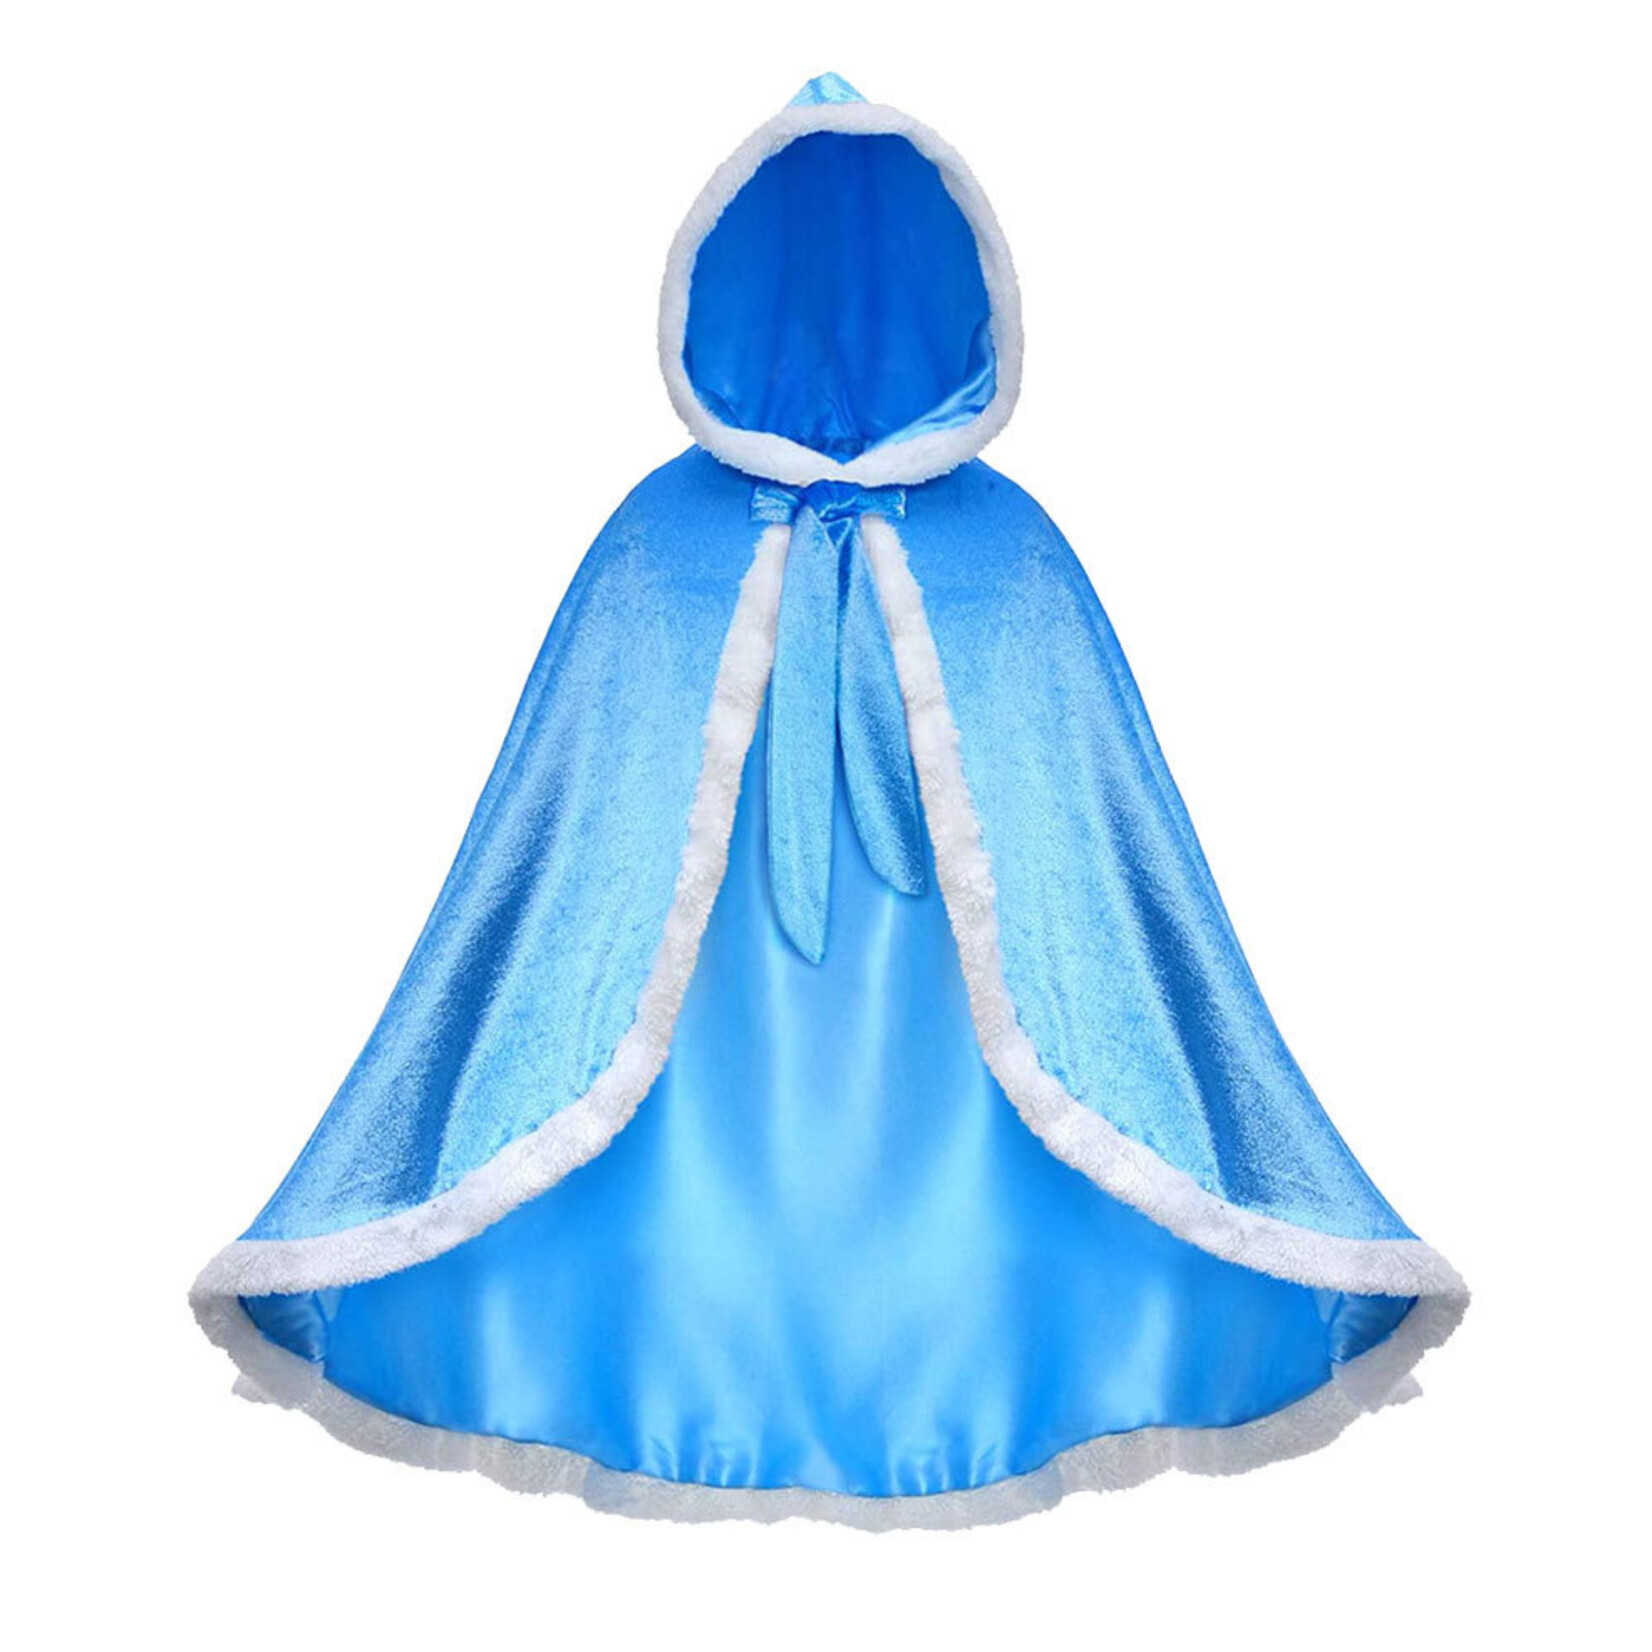 Prinsessenjurk meisje Mantel - Prinses - Frozen - Kroon - Toverstaf - Carnavalskleding kinderen - Blauw